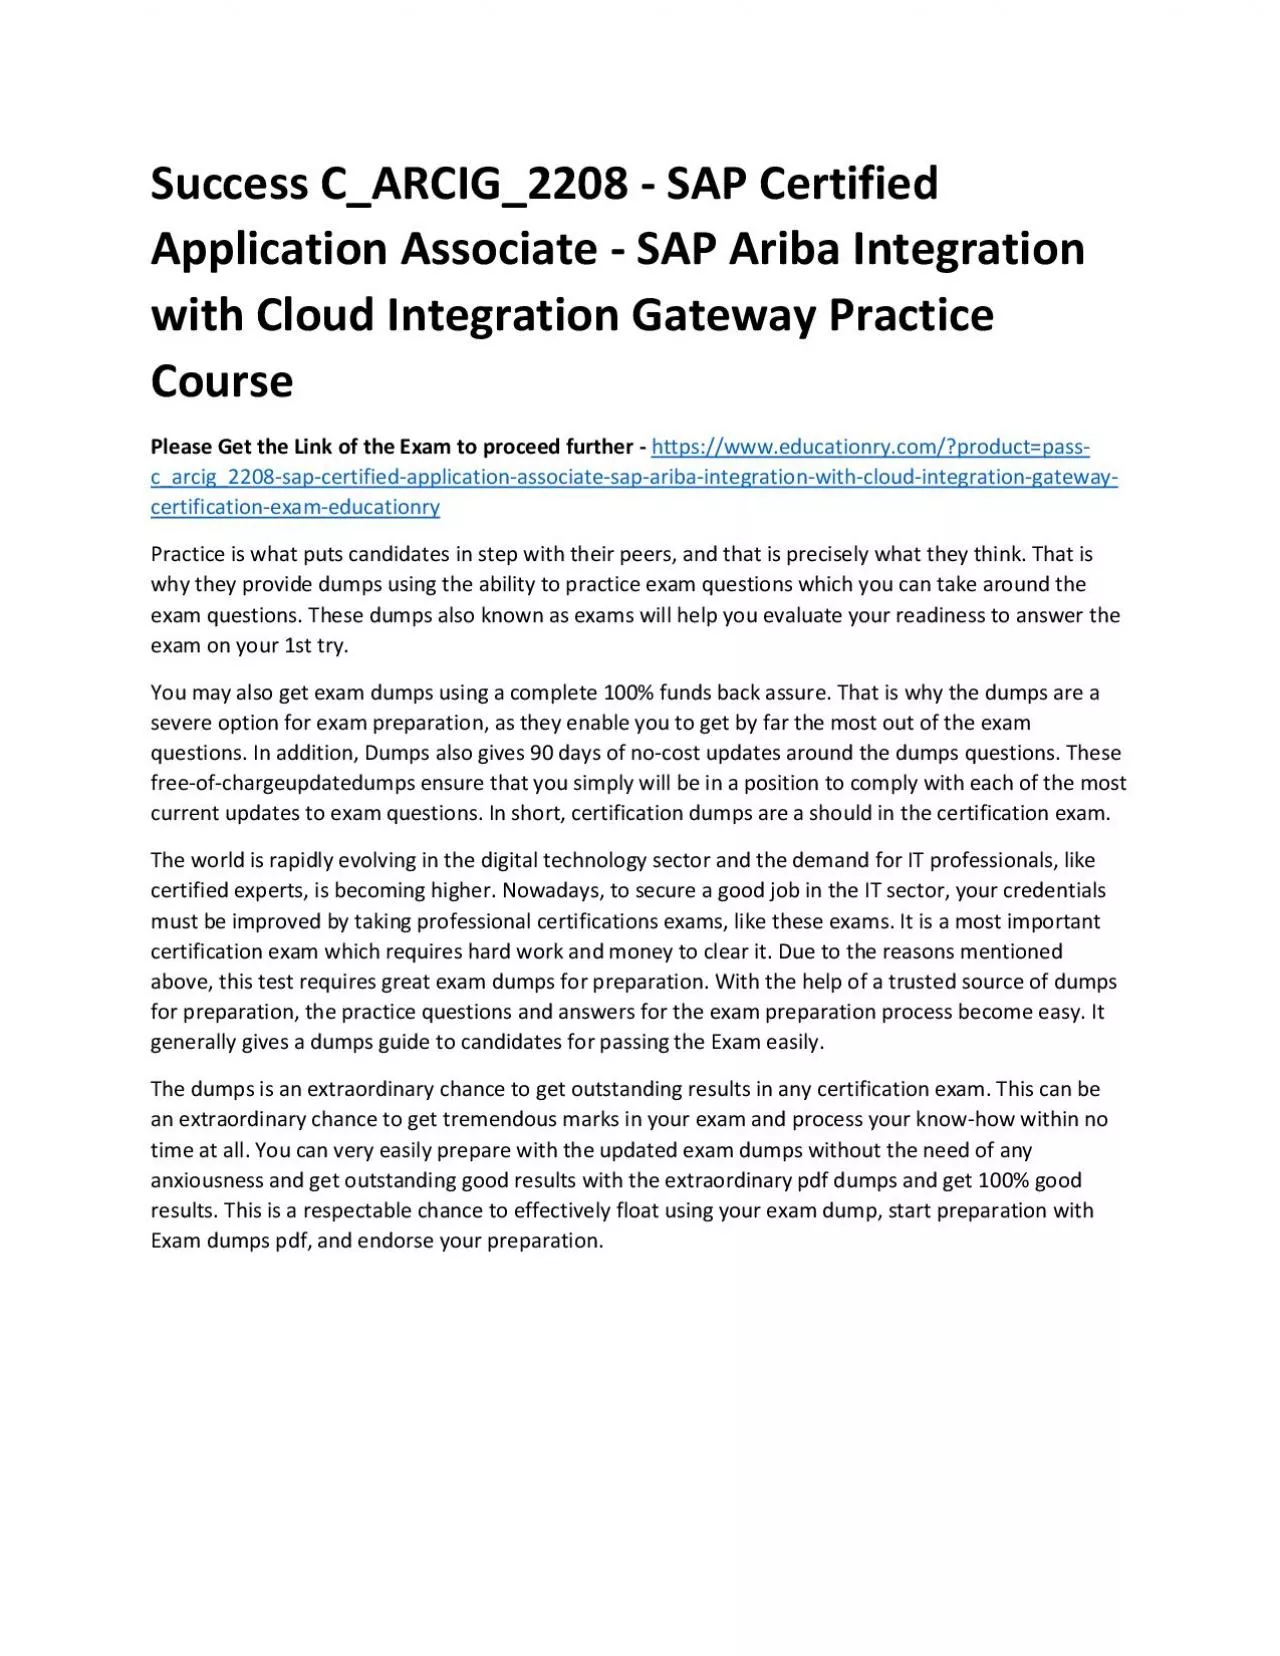 C_ARCIG_2208 - SAP Certified Application Associate - SAP Ariba Integration with Cloud